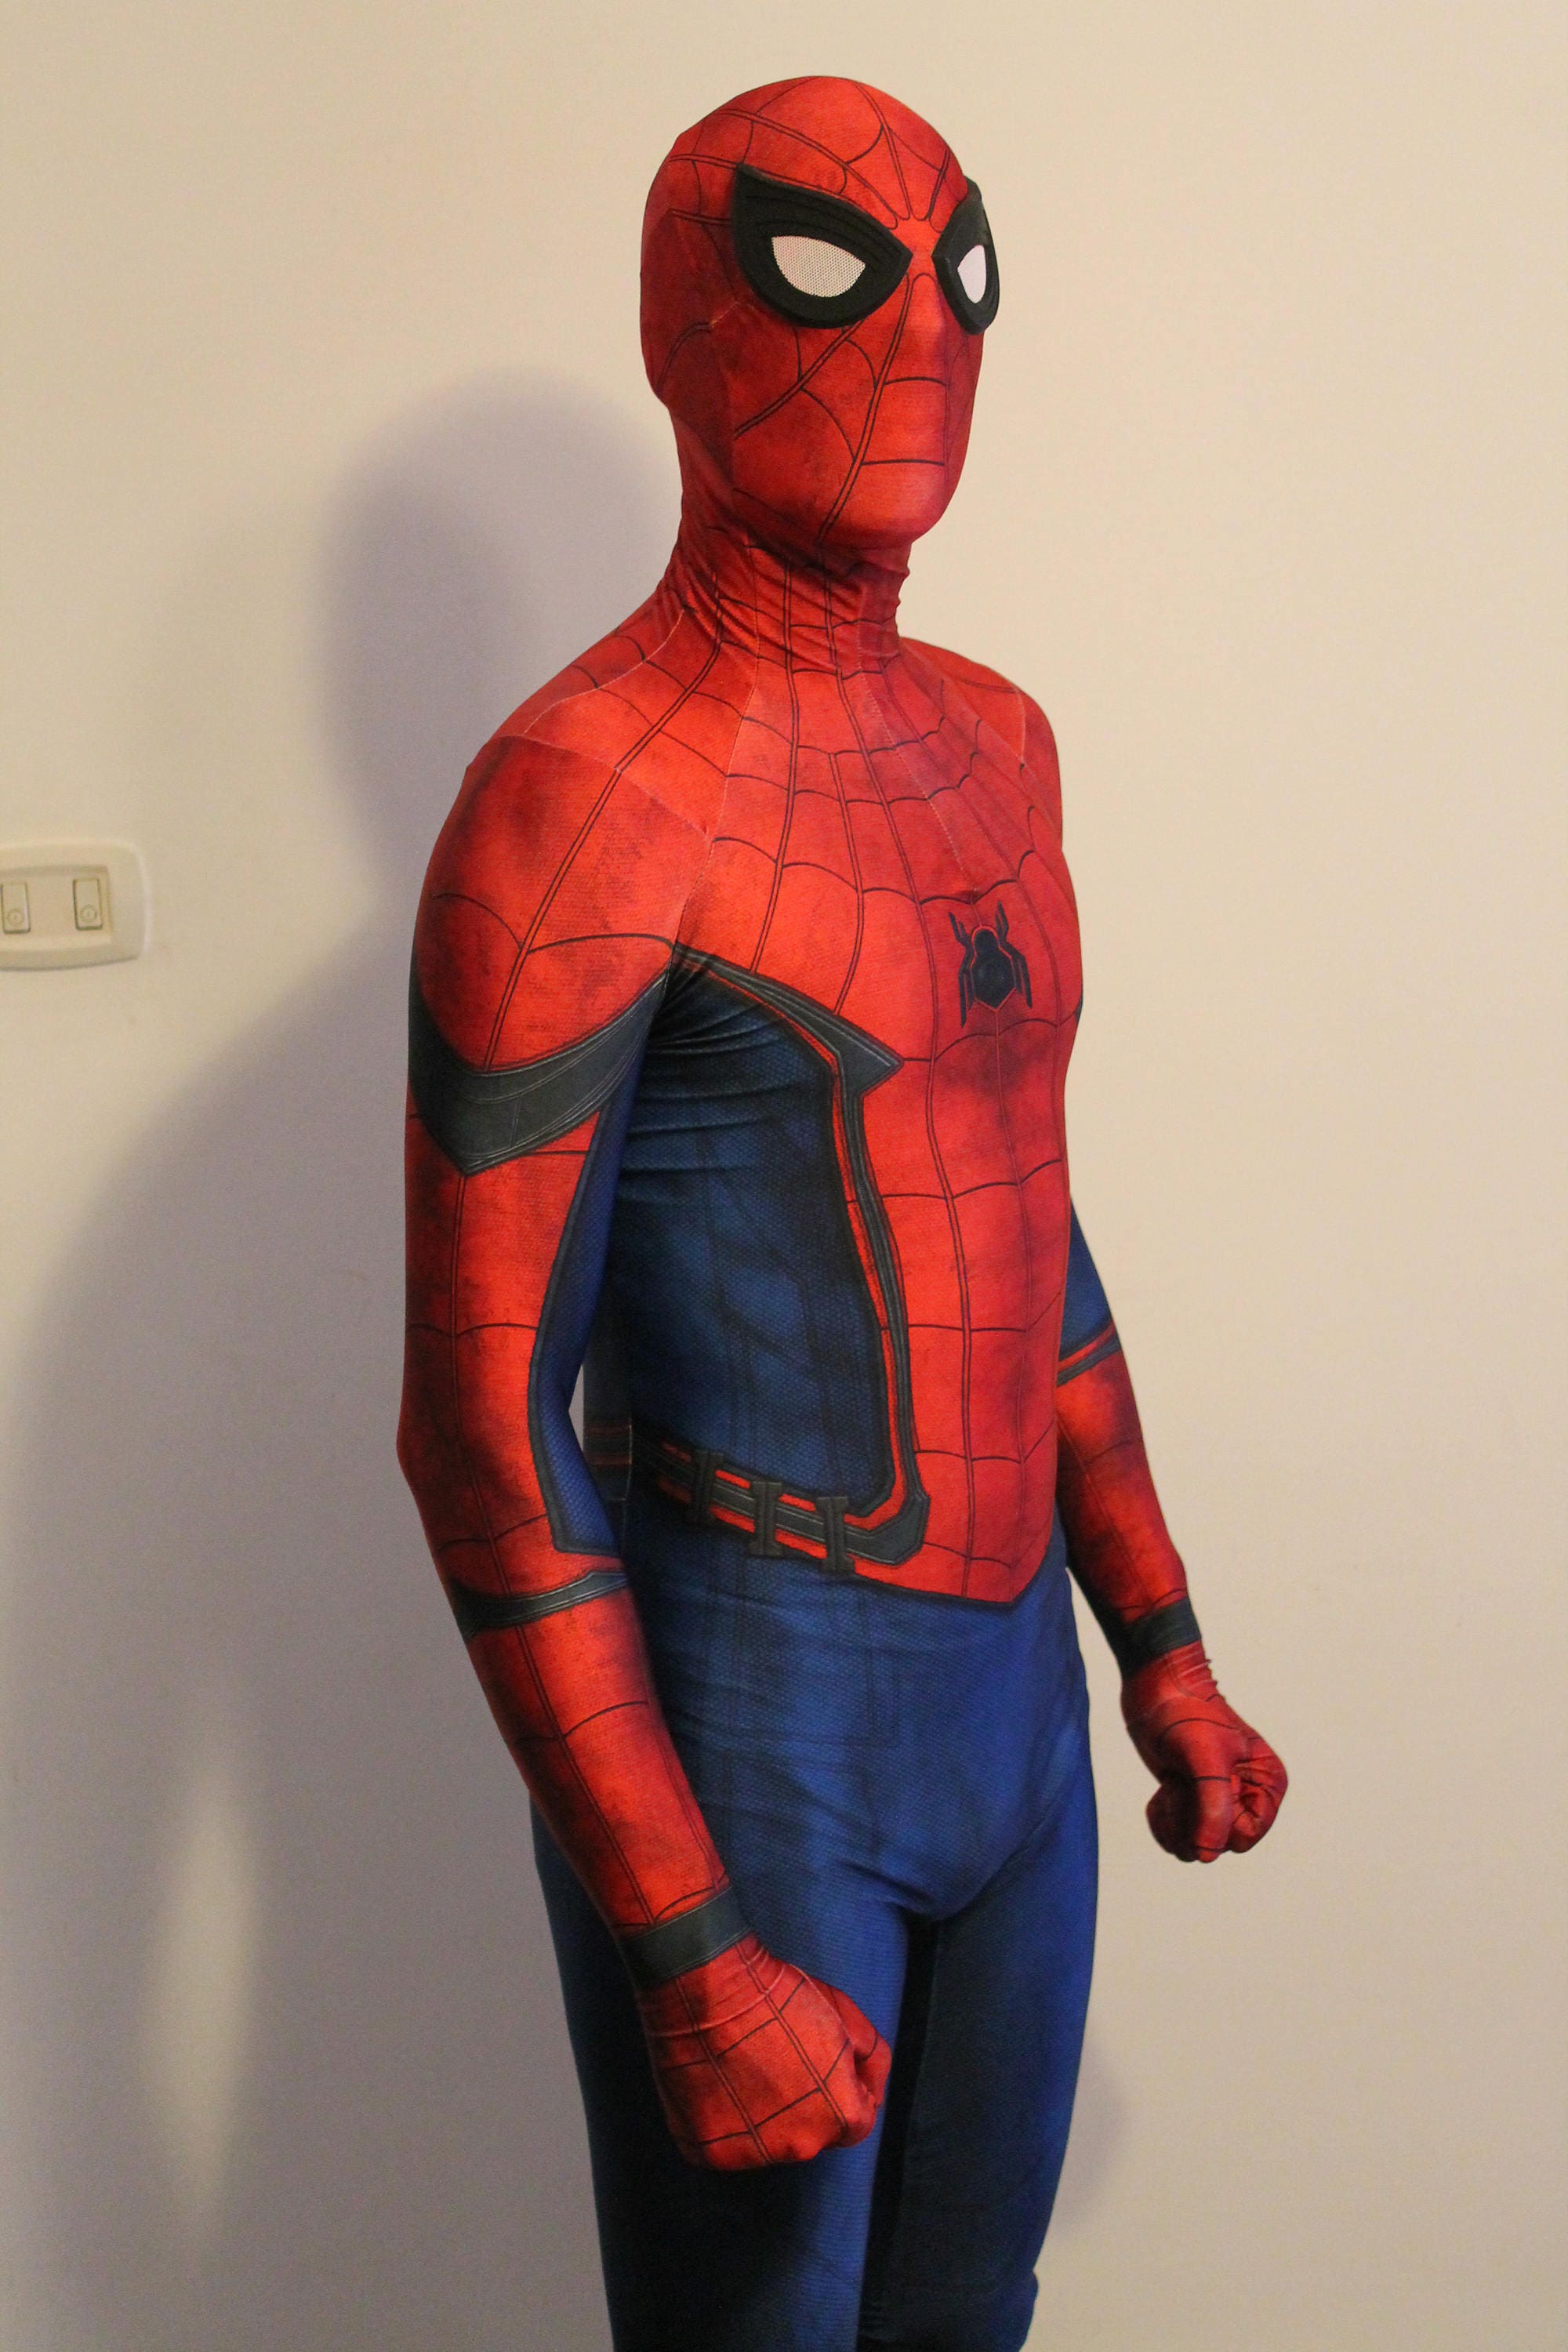 Replica Spiderman costume ' ' printed on